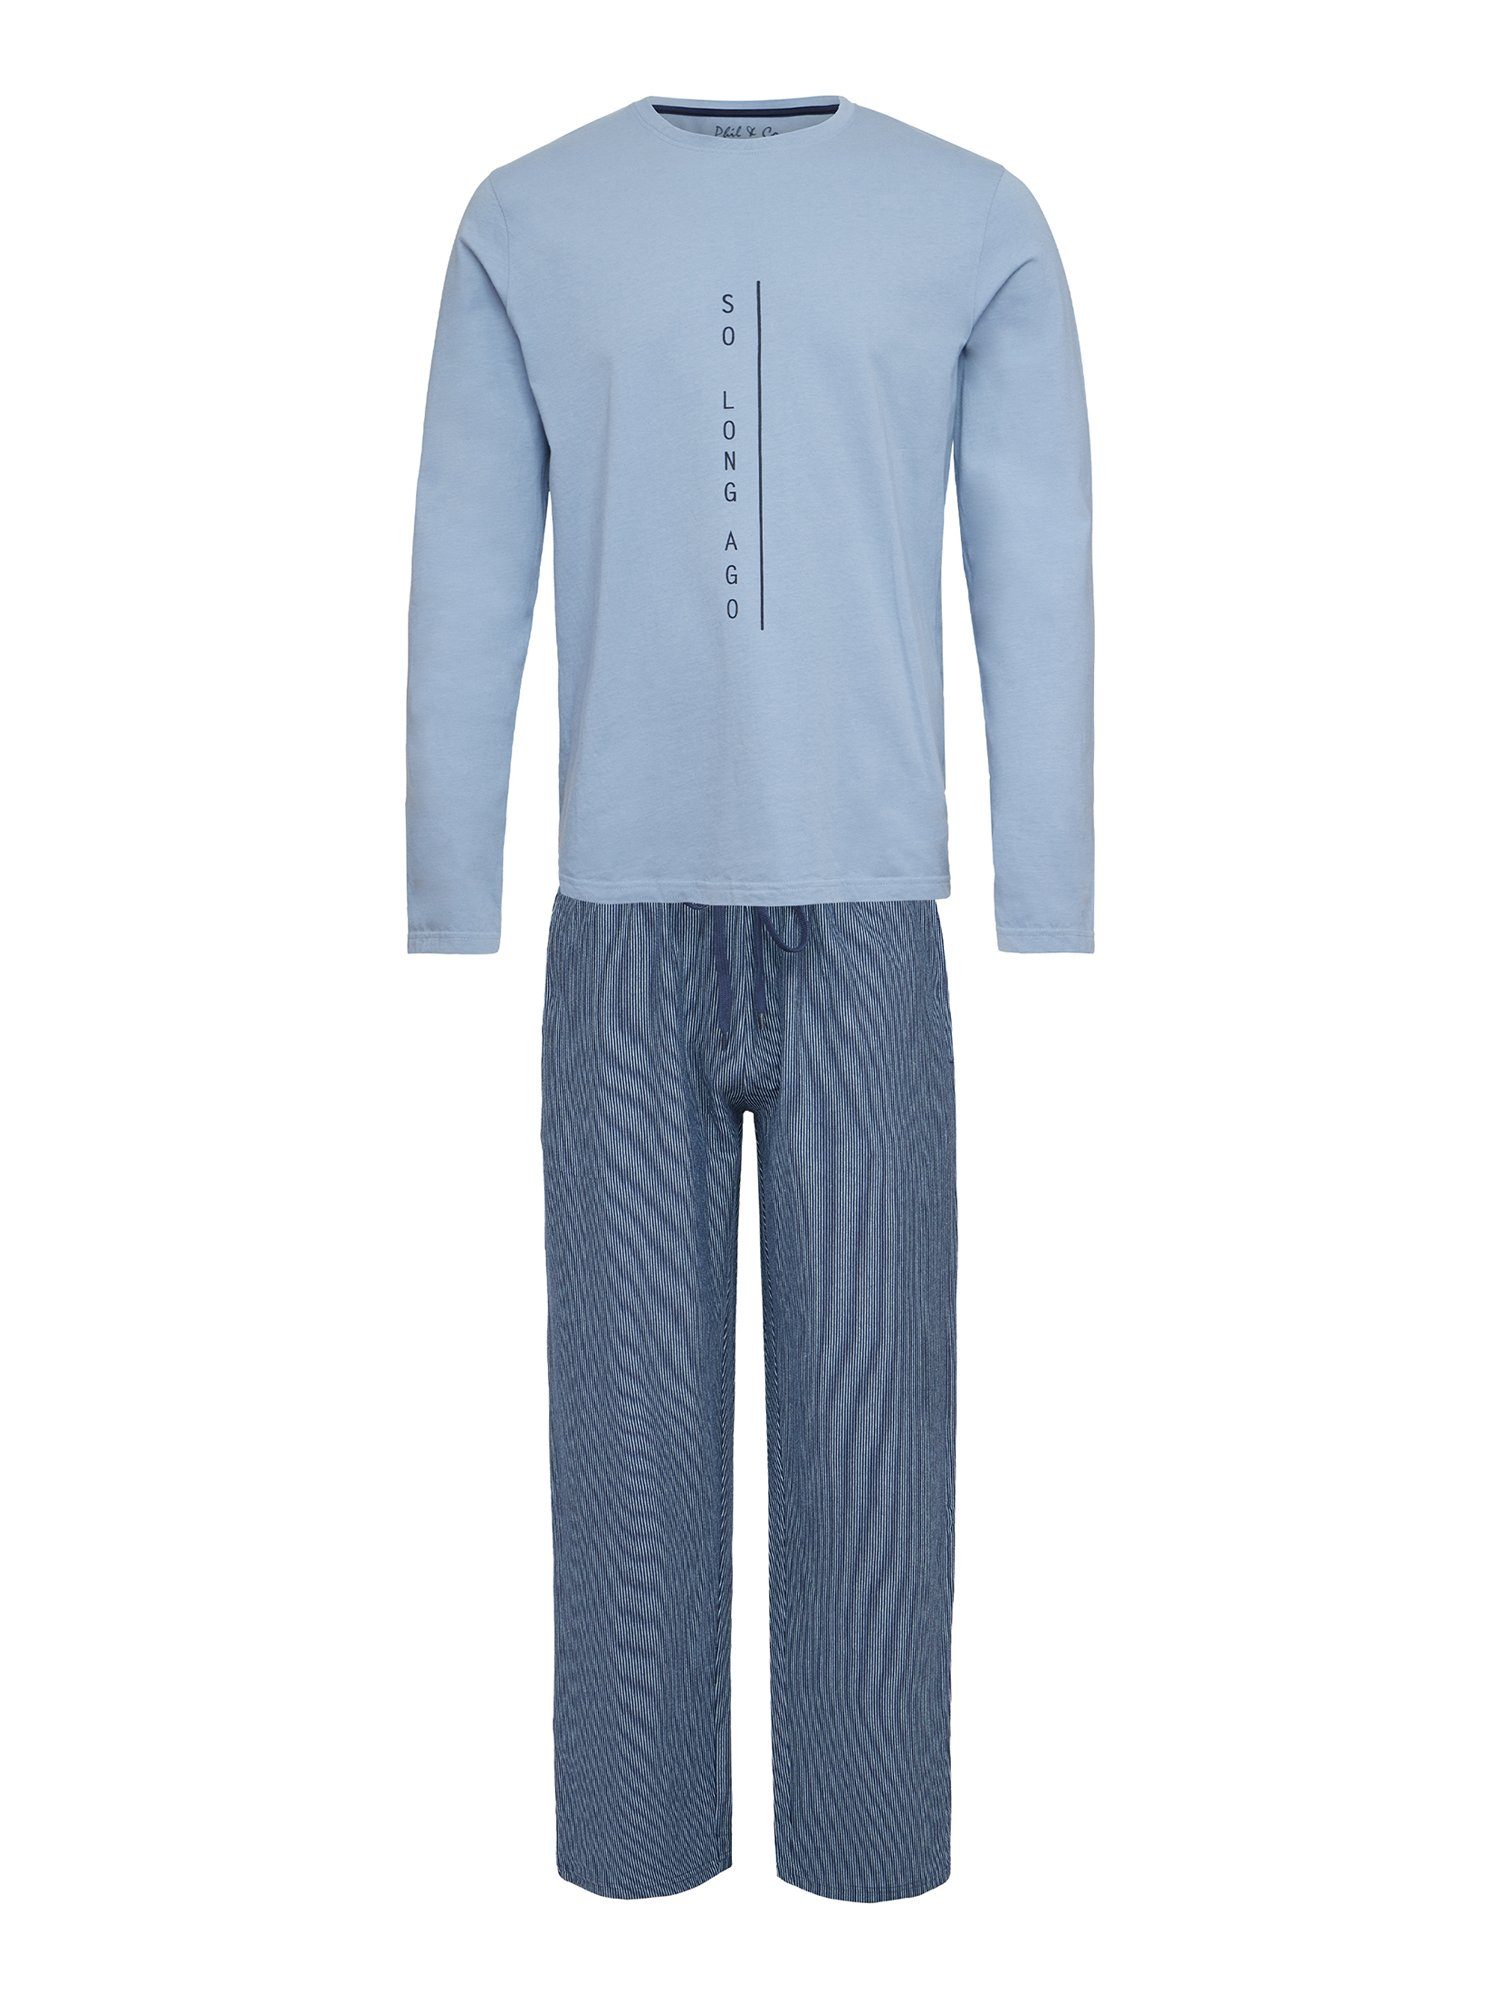 Phil & Co. Pyjama Special (2 tlg) schlafanzug schlafmode bequem hellblau-nadelstreifen